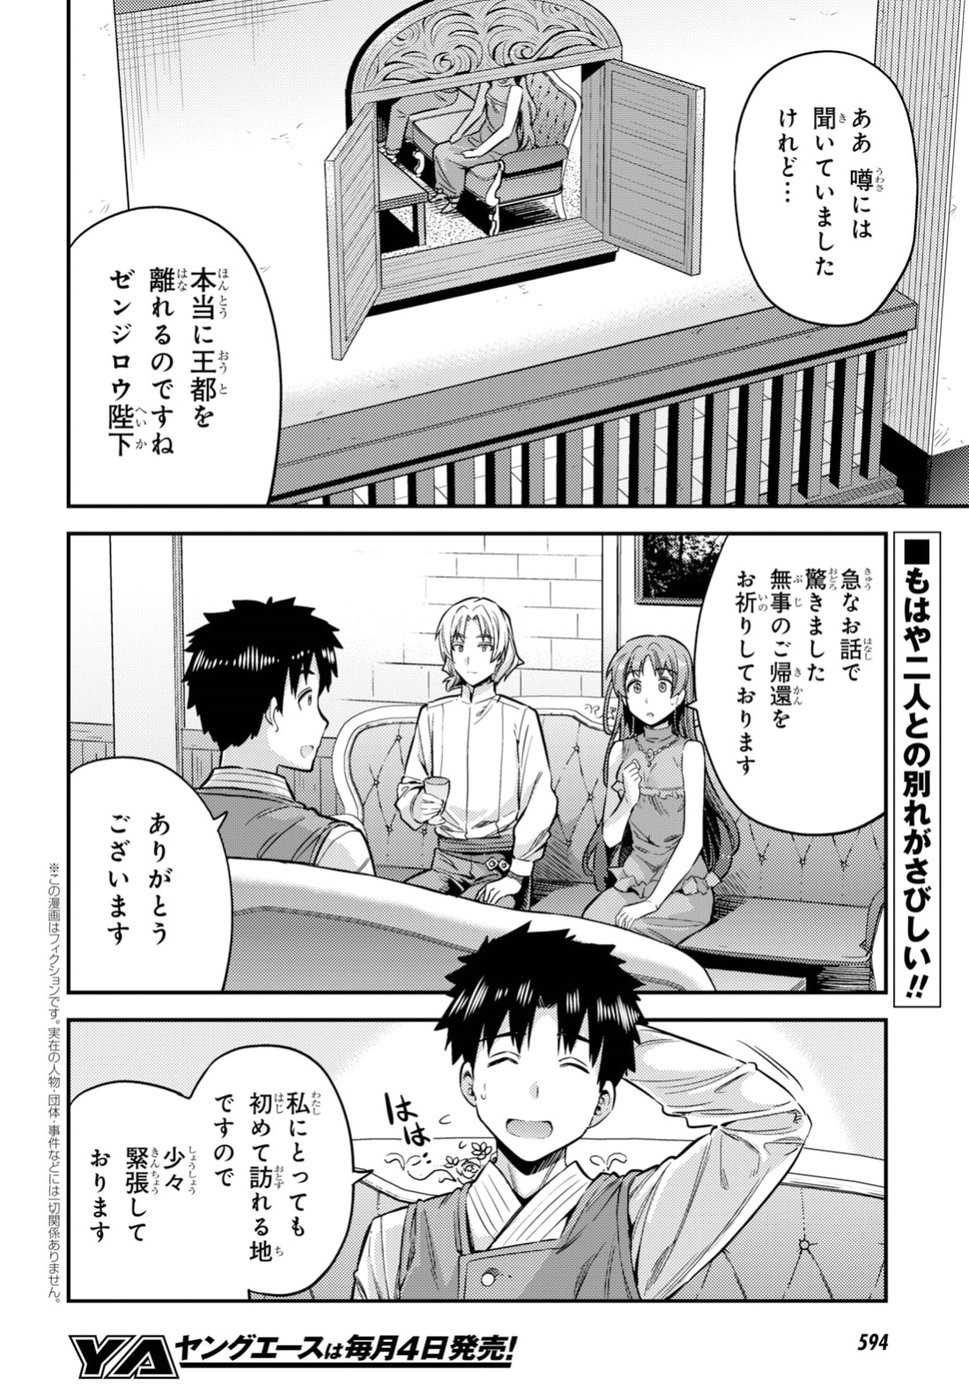 Risou no Himo Seikatsu - Chapter 026 - Page 2